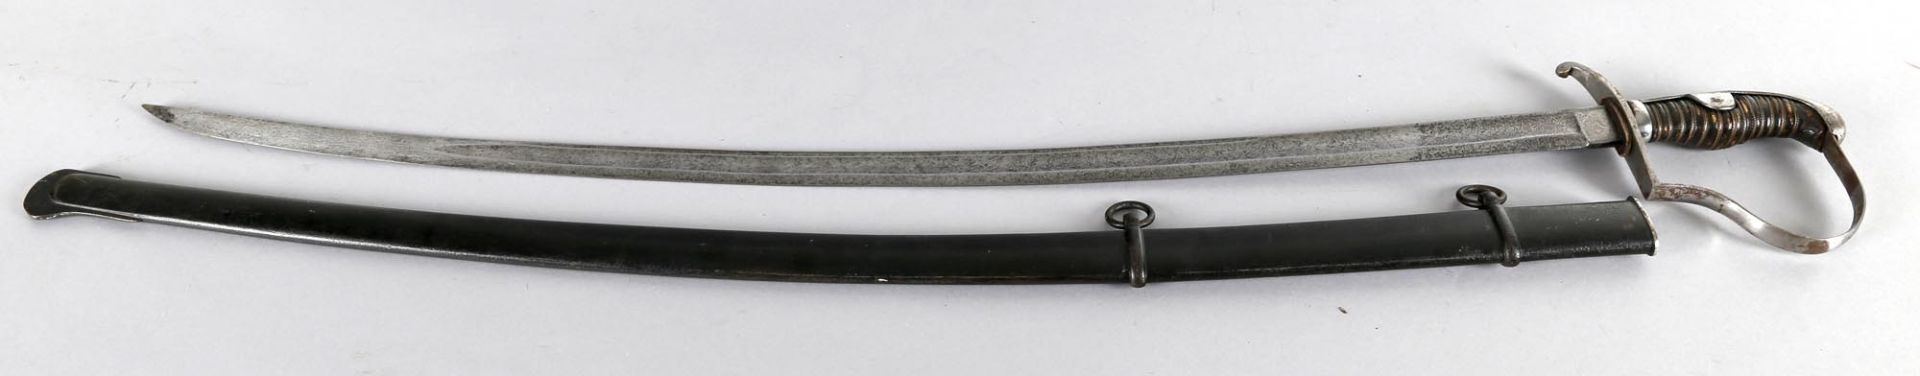 Blücher-Säbel/Artillerie-Säbel, Anfang/Mitte 19. Jh., Preußeneinschneidige Rückenklinge aus Eisen, - Bild 2 aus 3